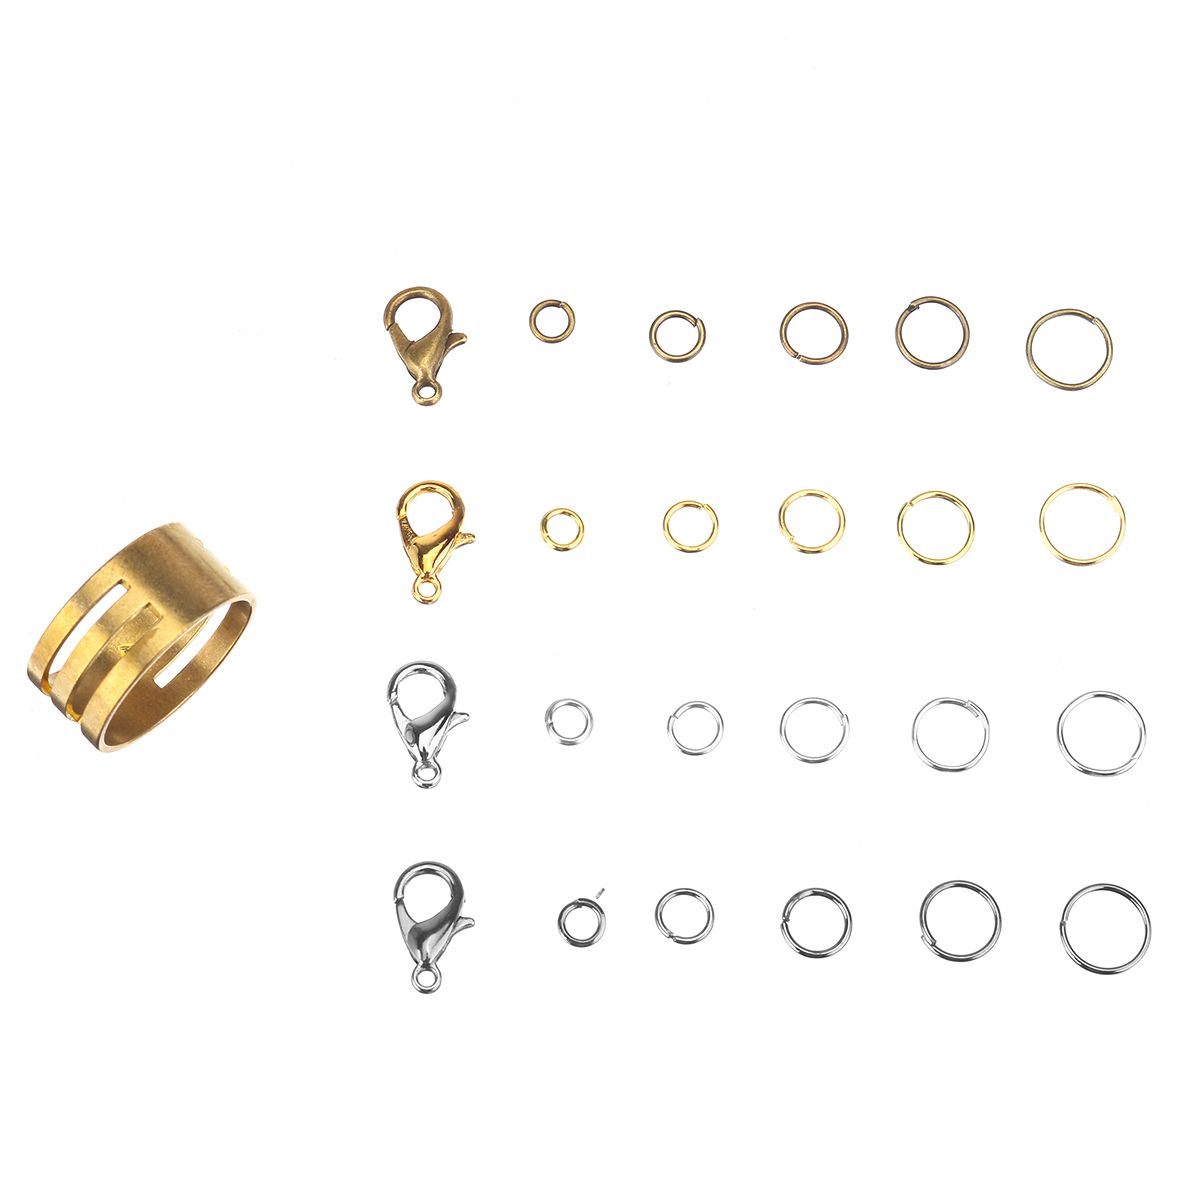 Jewelry-Making-Kit-Set-Jewelry-Beading-Making-And-Repair-Tools-Kit-1695558